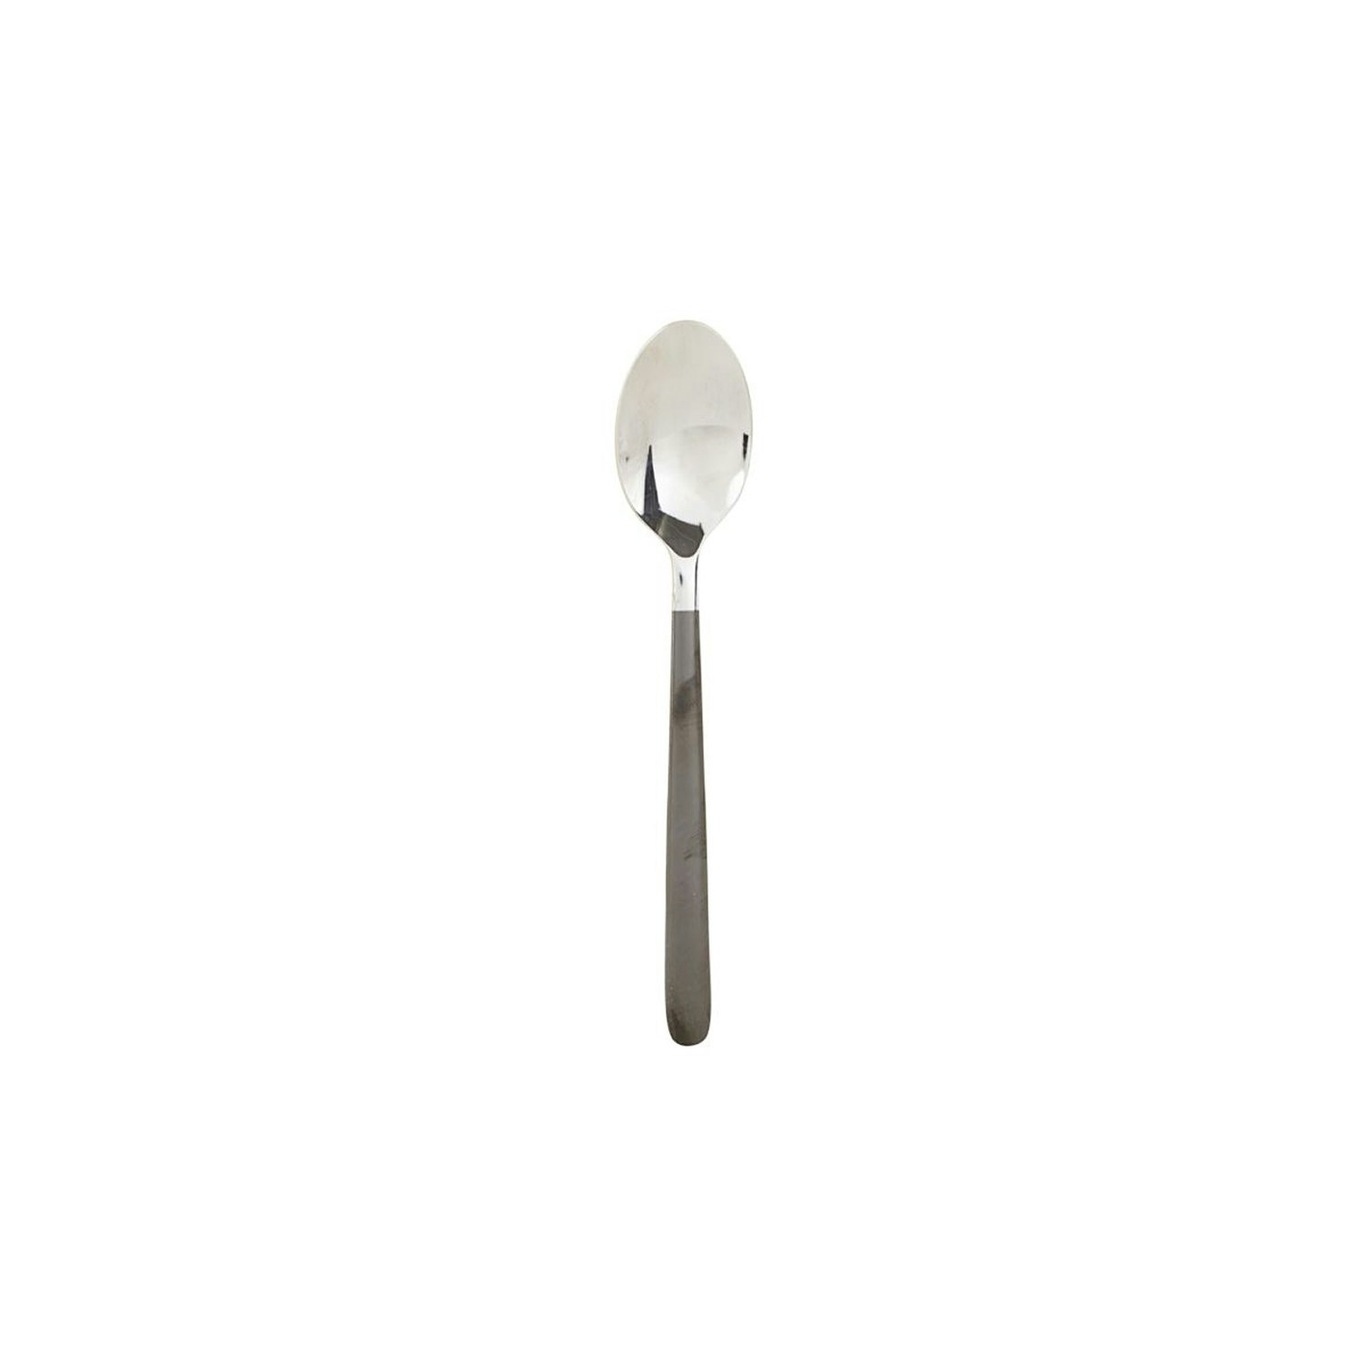 https://royaldesign.com/image/2/house-doctor-ox-teaspoon-0?w=800&quality=80